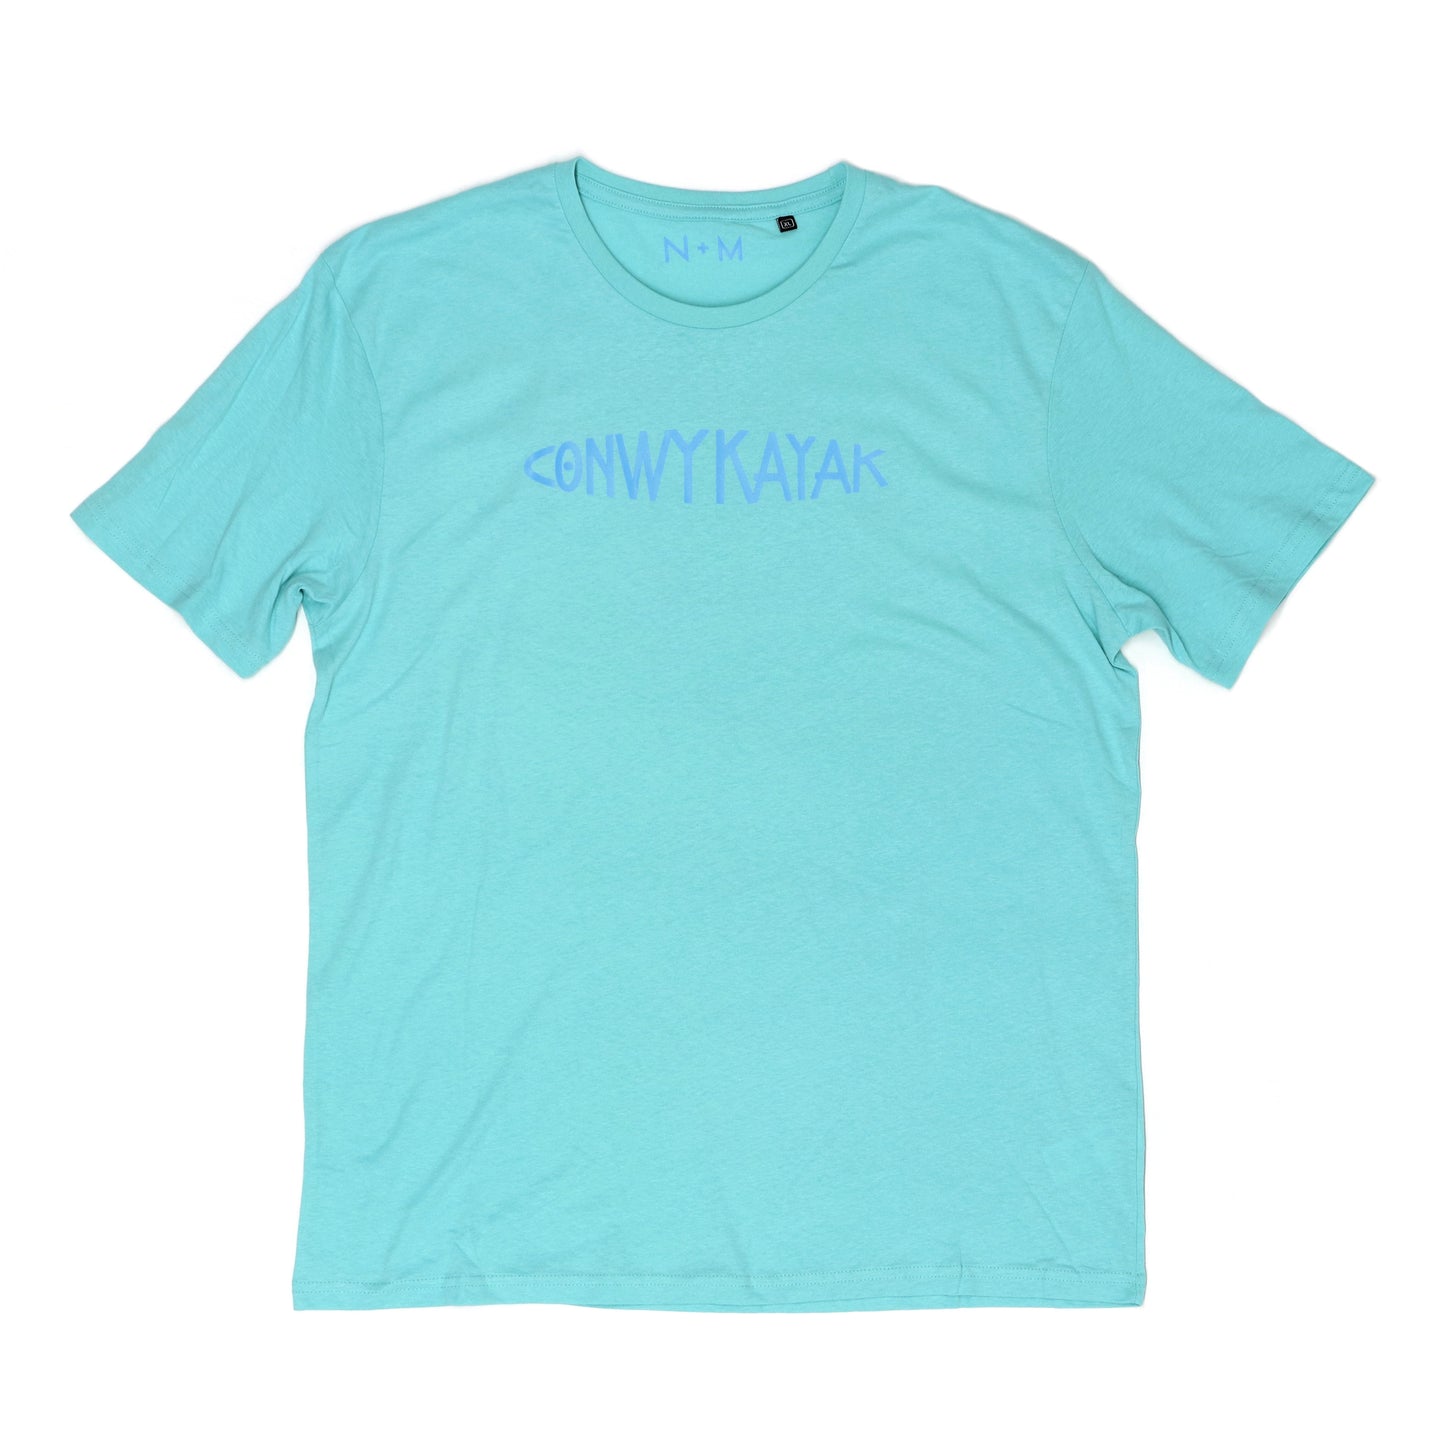 Conwy Kayak - Peppermint Short Sleeve T-Shirt - 0